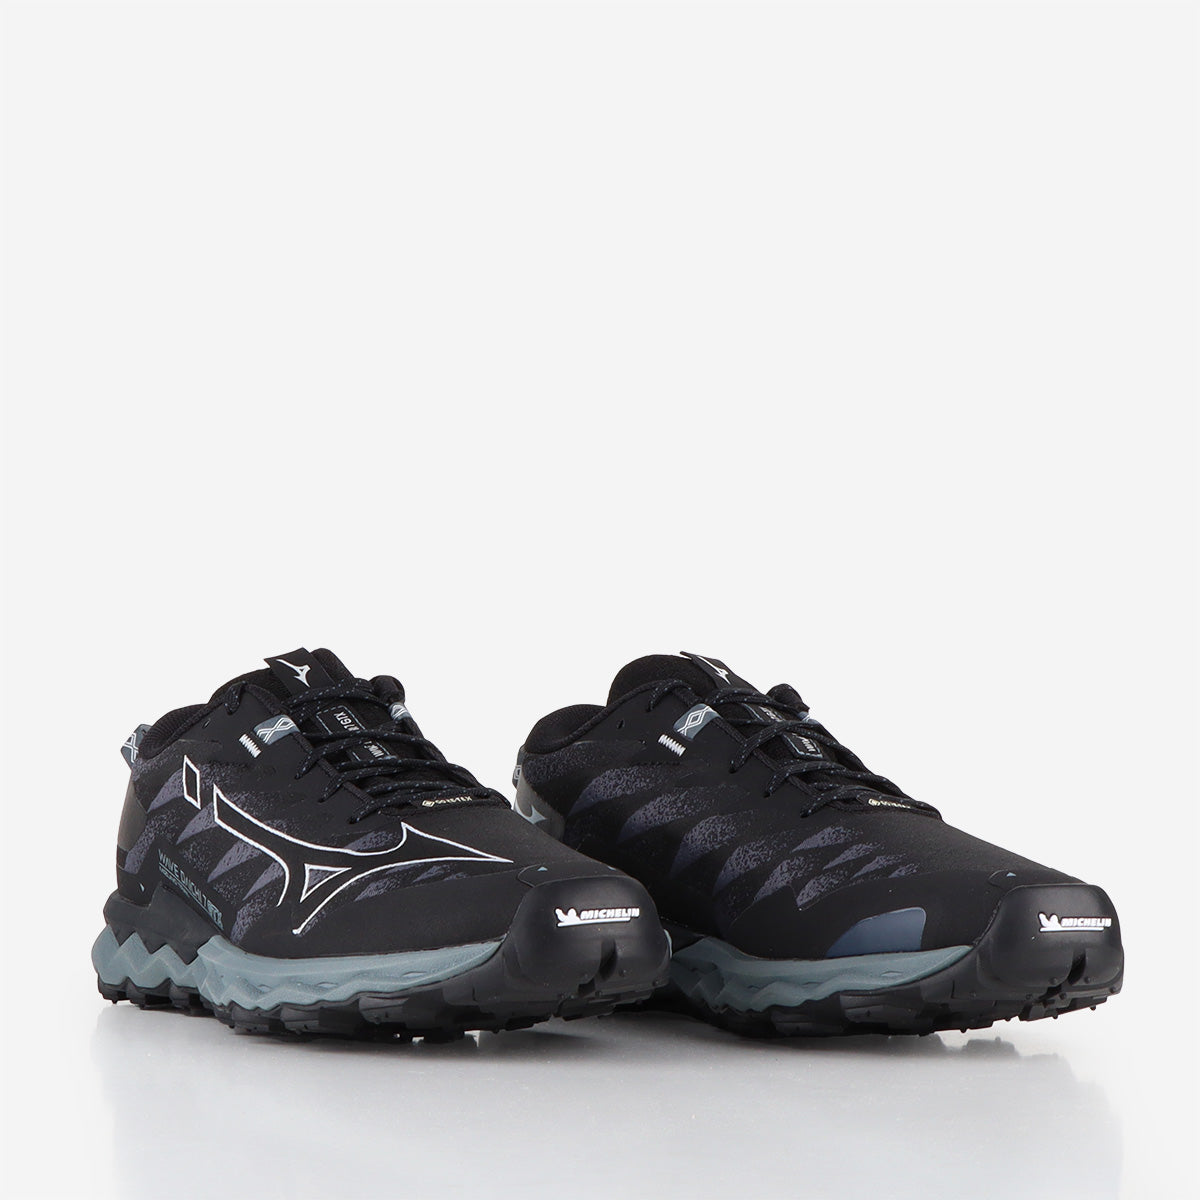 Mizuno Wave Daichi 7 GTX Shoes, Black Ombre Blue Stormy Weather, Detail Shot 2